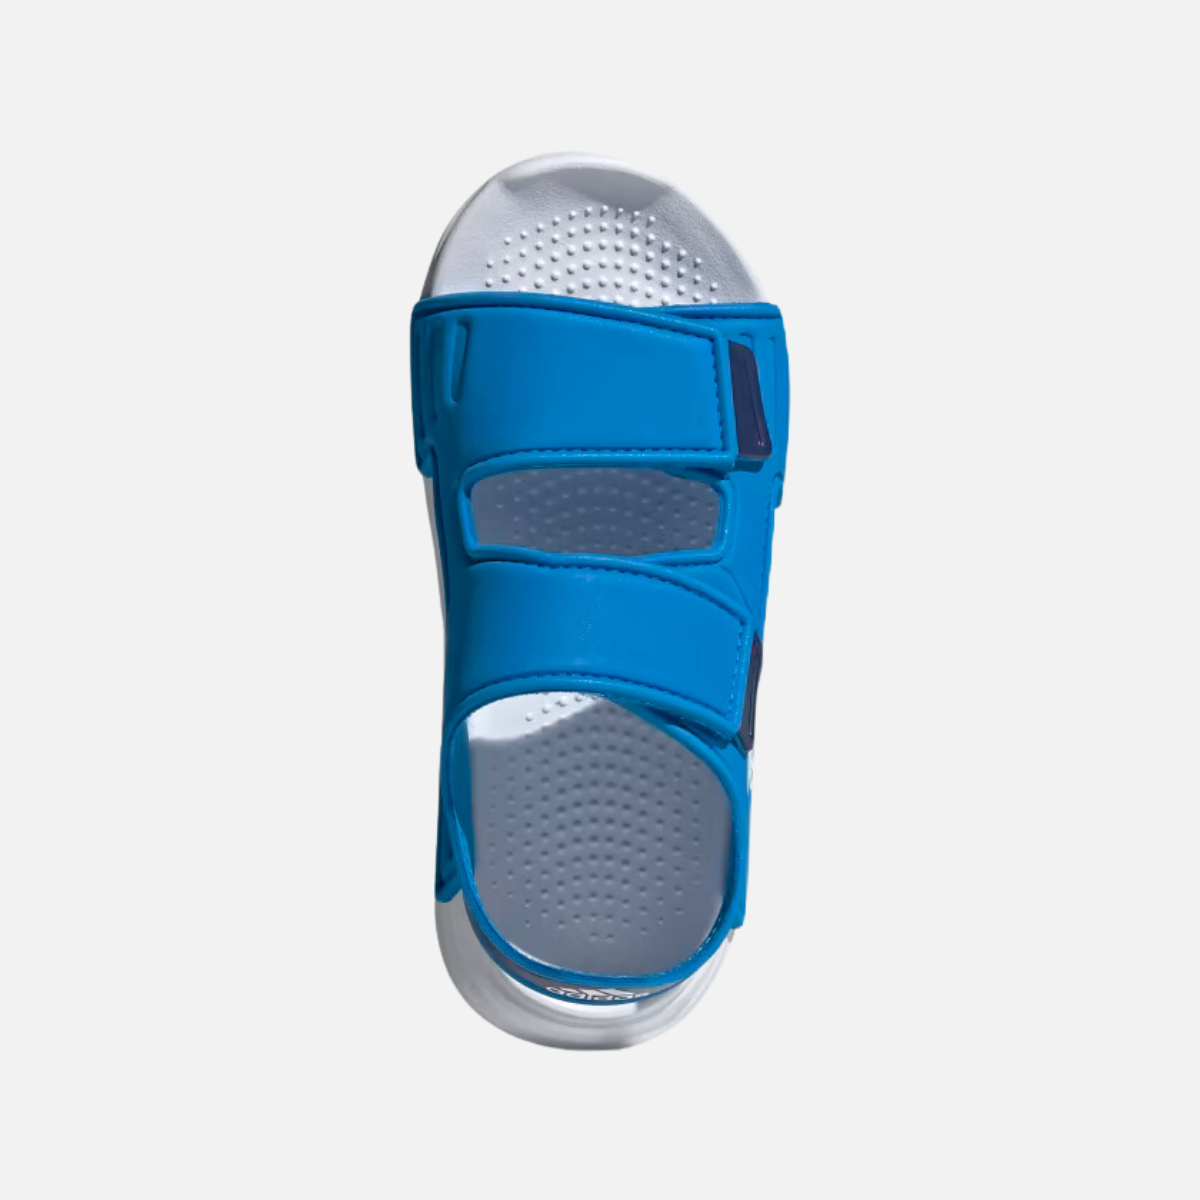 Adidas Altaswim Kids Unisex Sandals (4-7 YEAR) -Blue Rush/Cloud White/Dark Blue